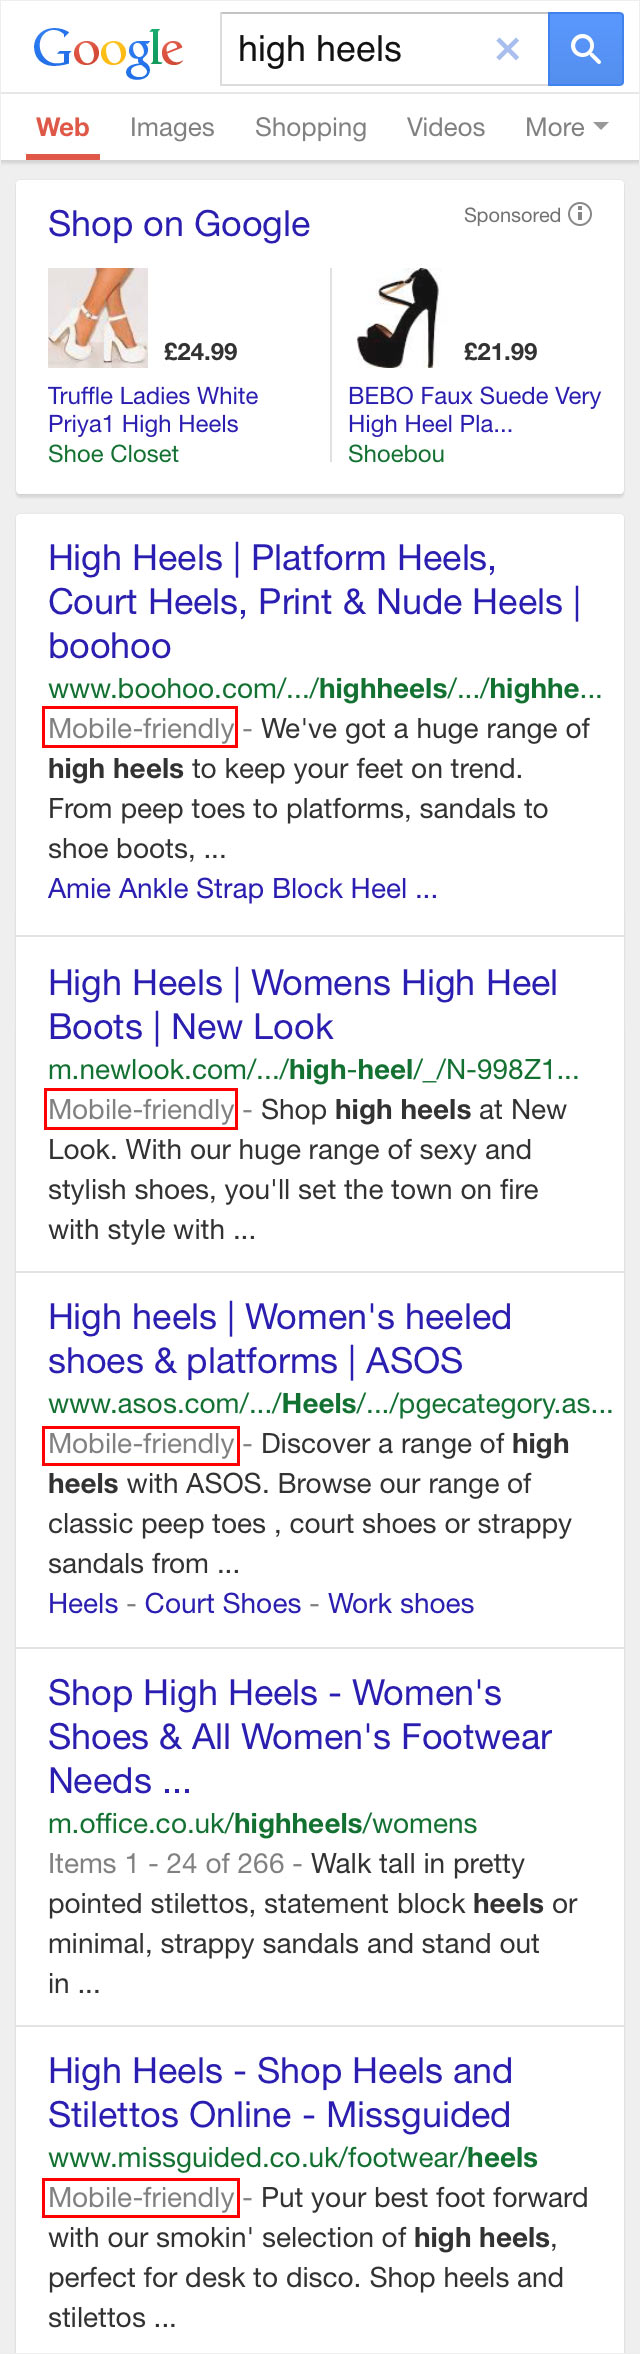 Google_search_high-heels